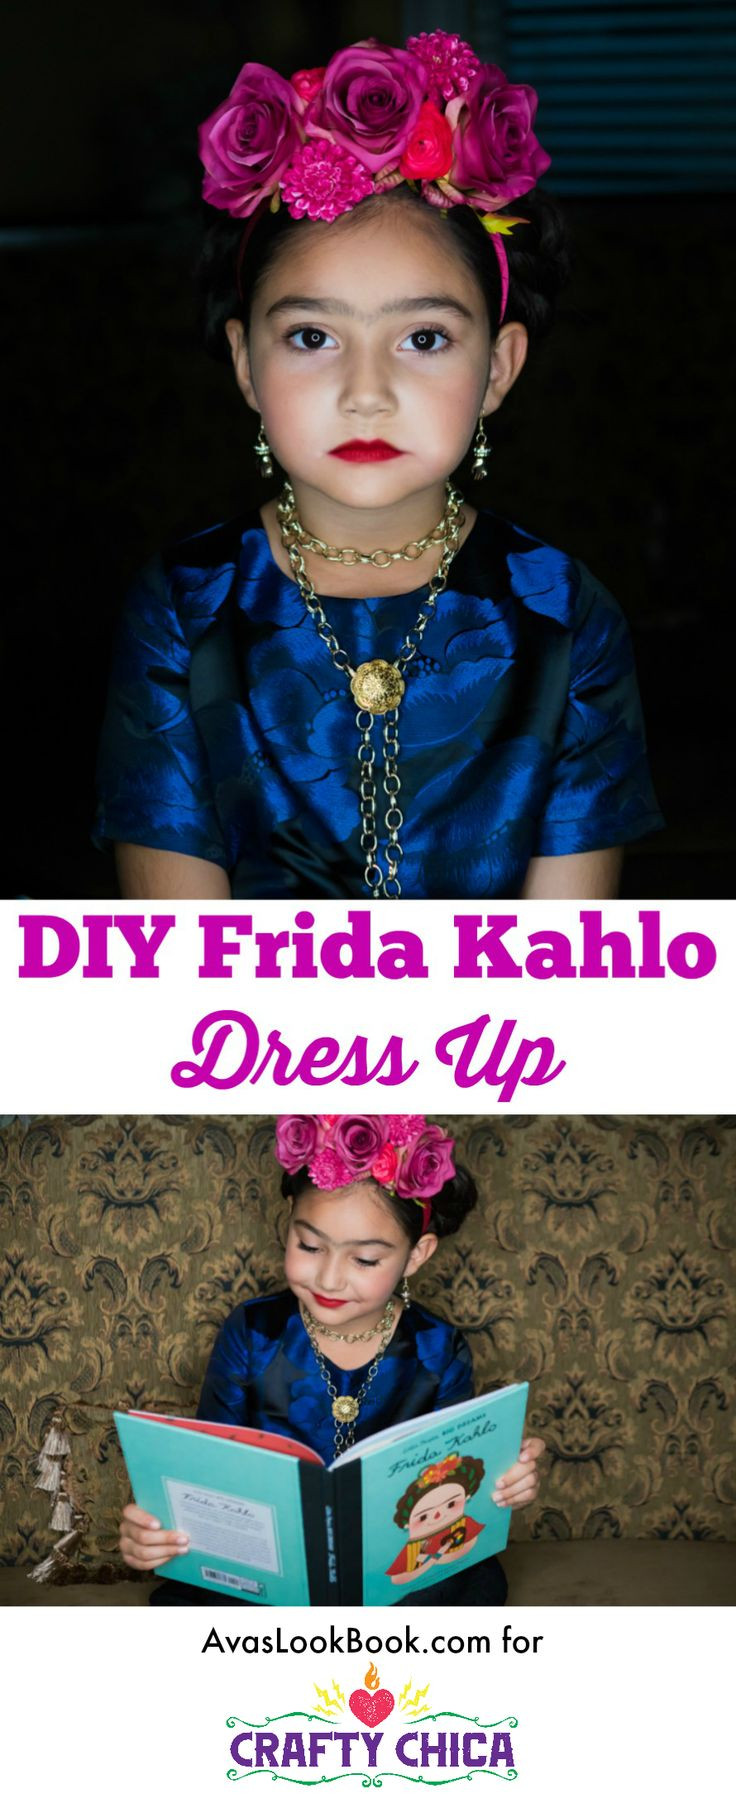 Frida Kahlo Costume DIY
 25 Best Ideas about Frida Kahlo Costume on Pinterest